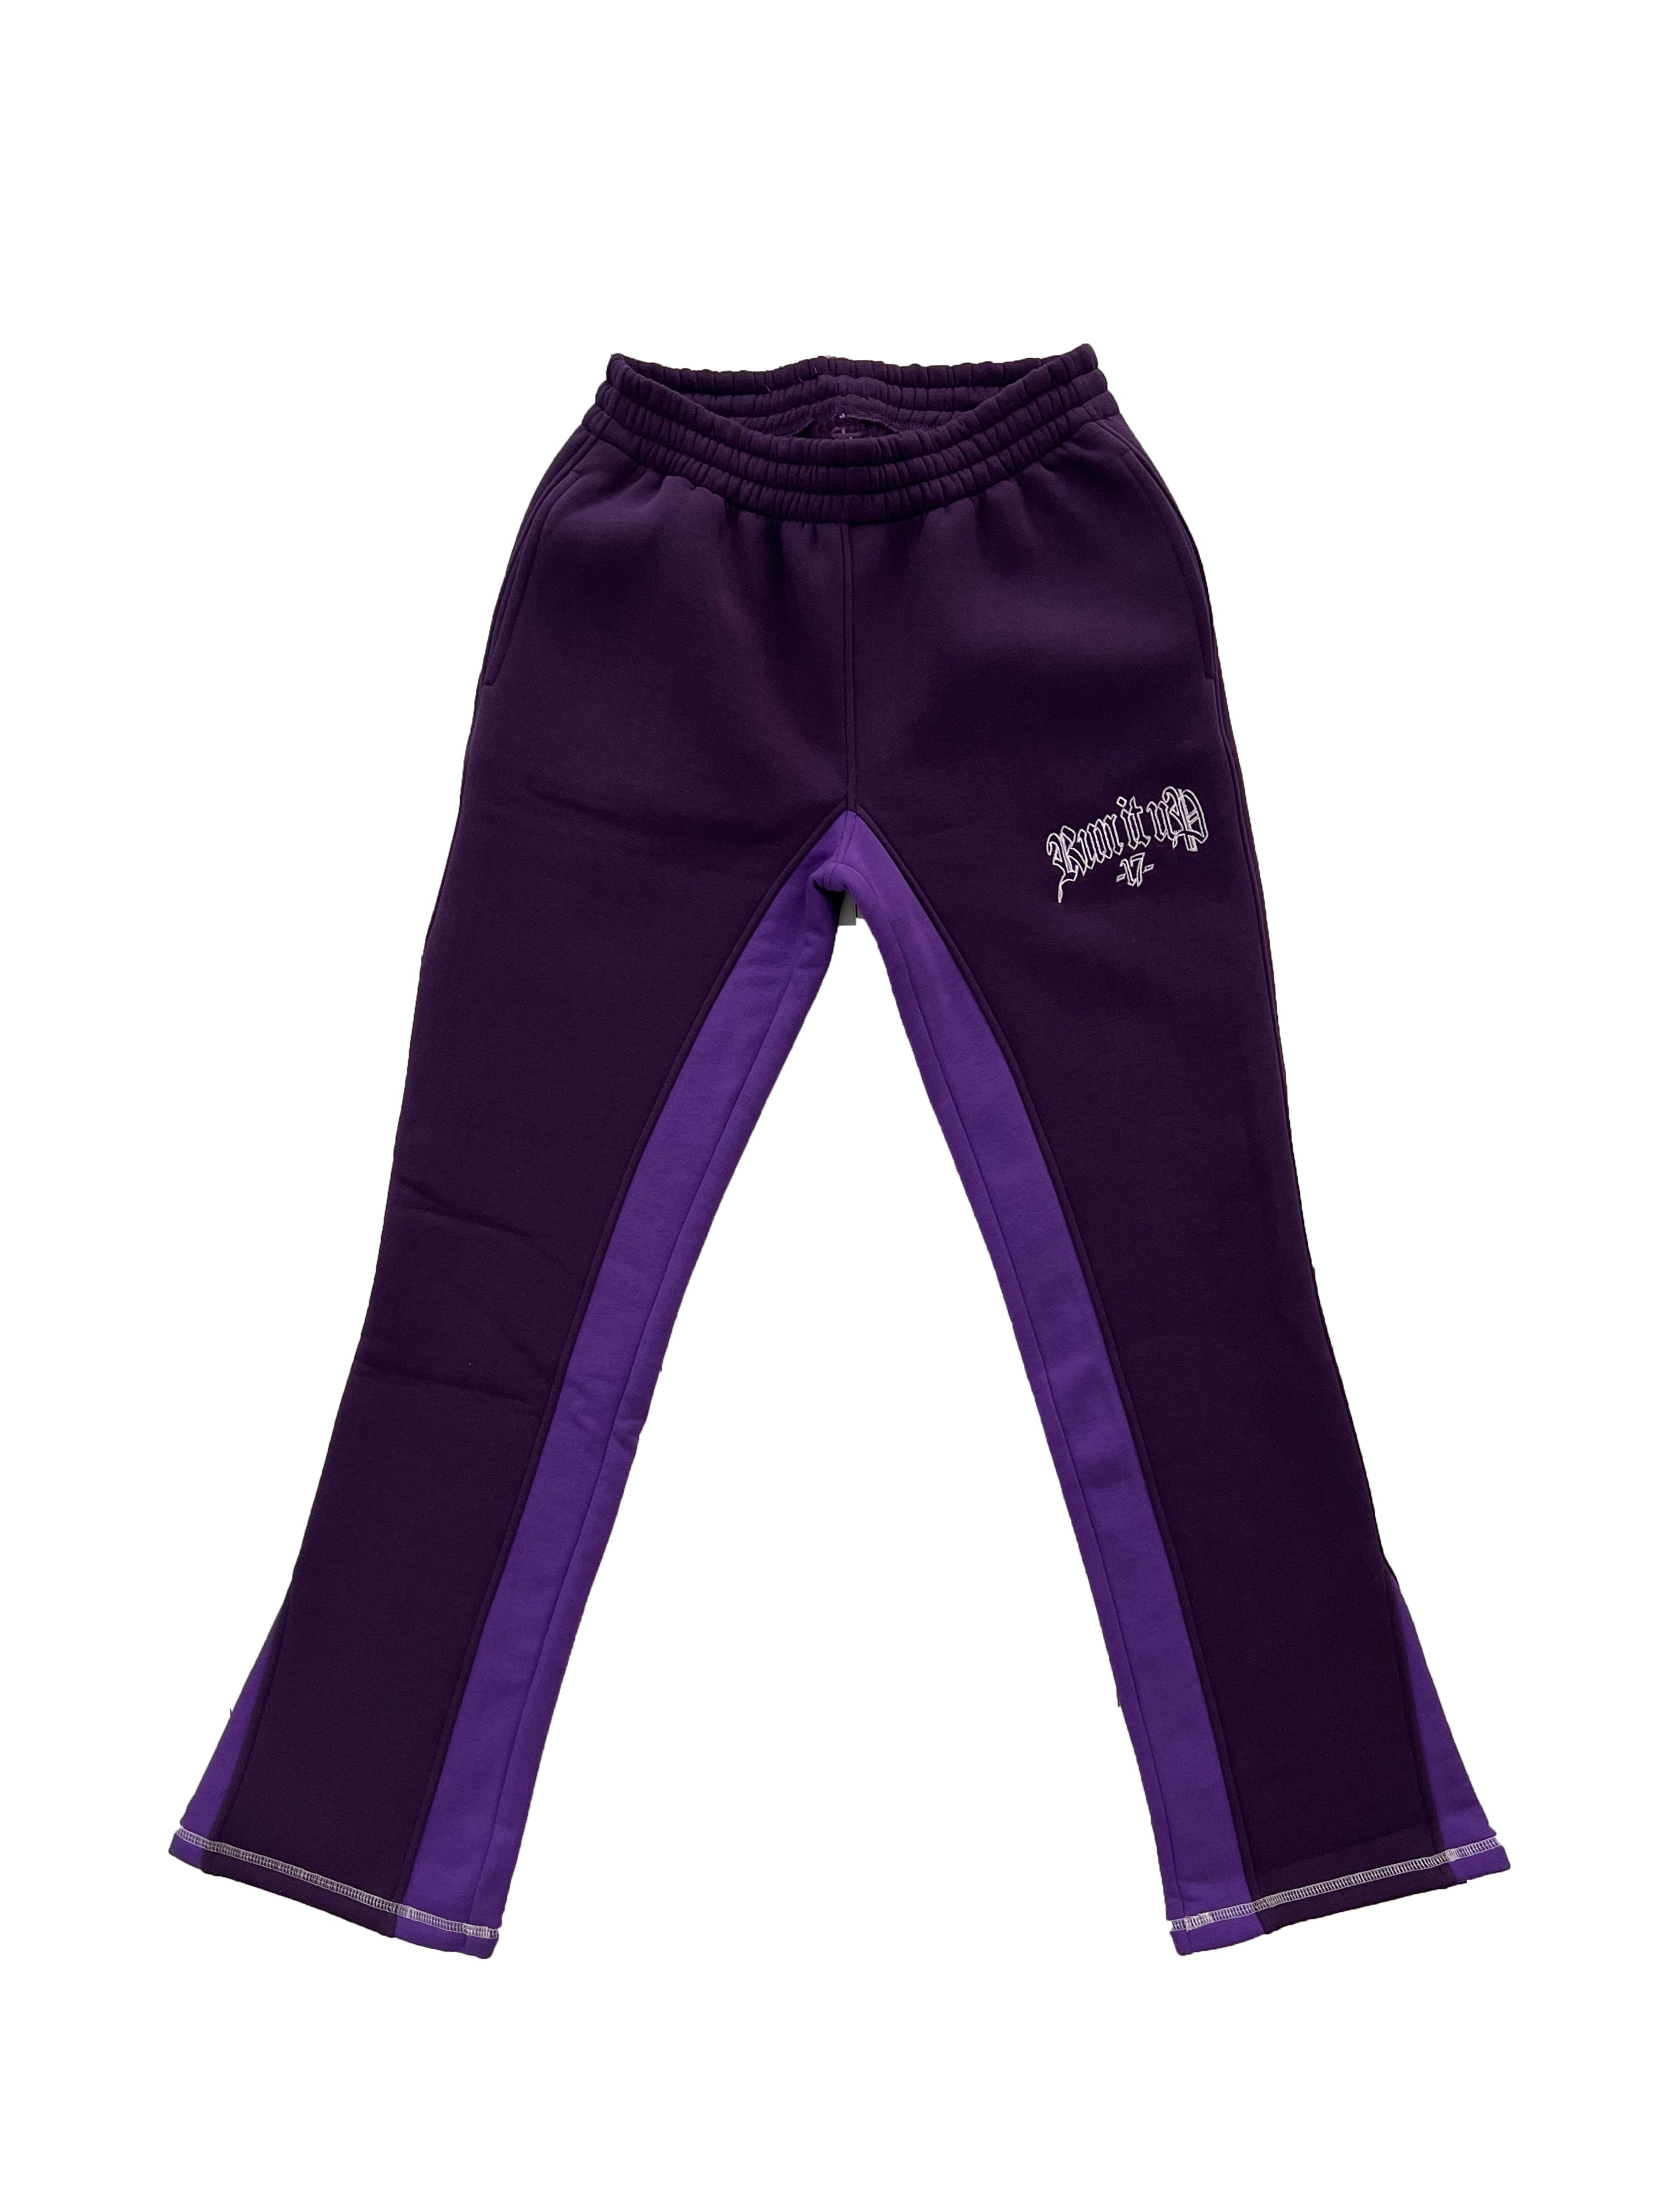 Run it up 2.0 - Purple Pants